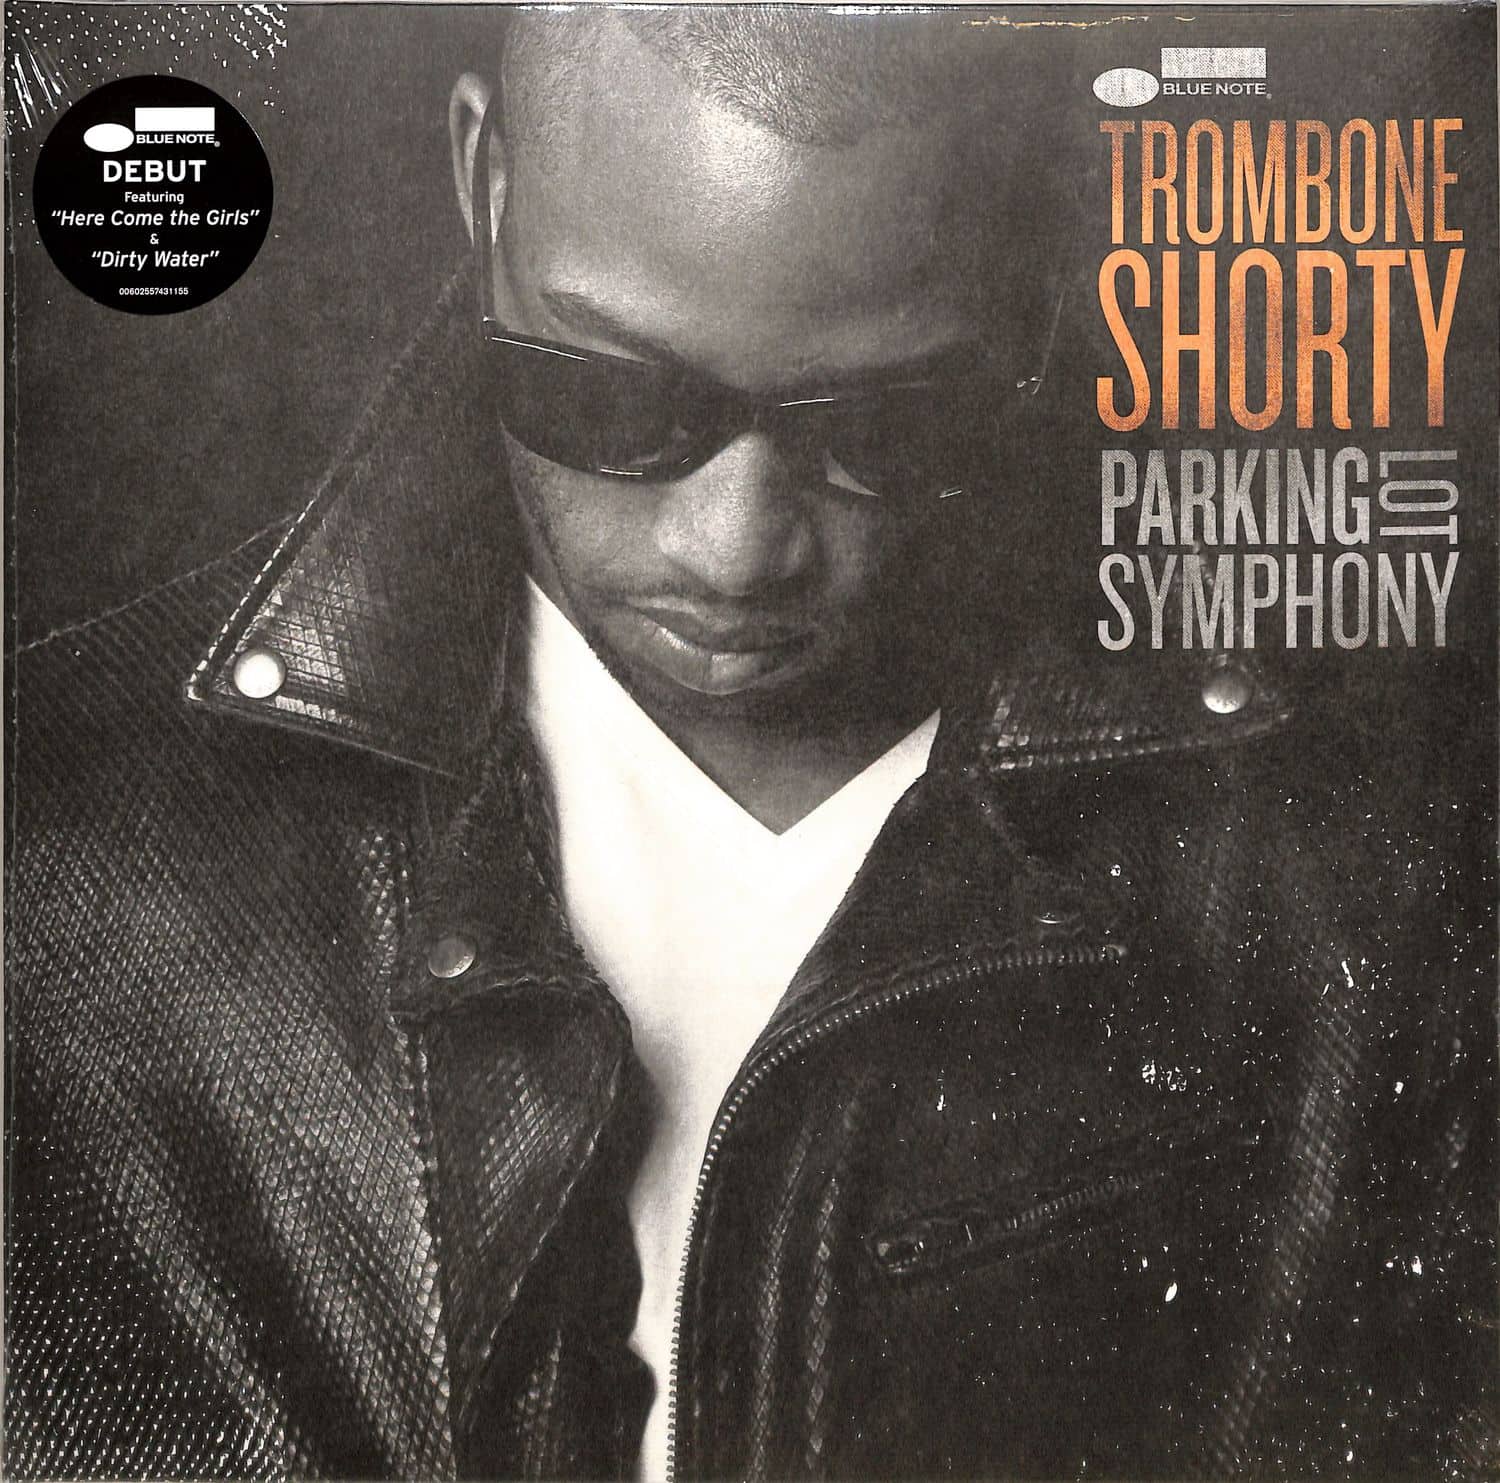 Trombone Shorty - PARKING LOT SYMPHONY 